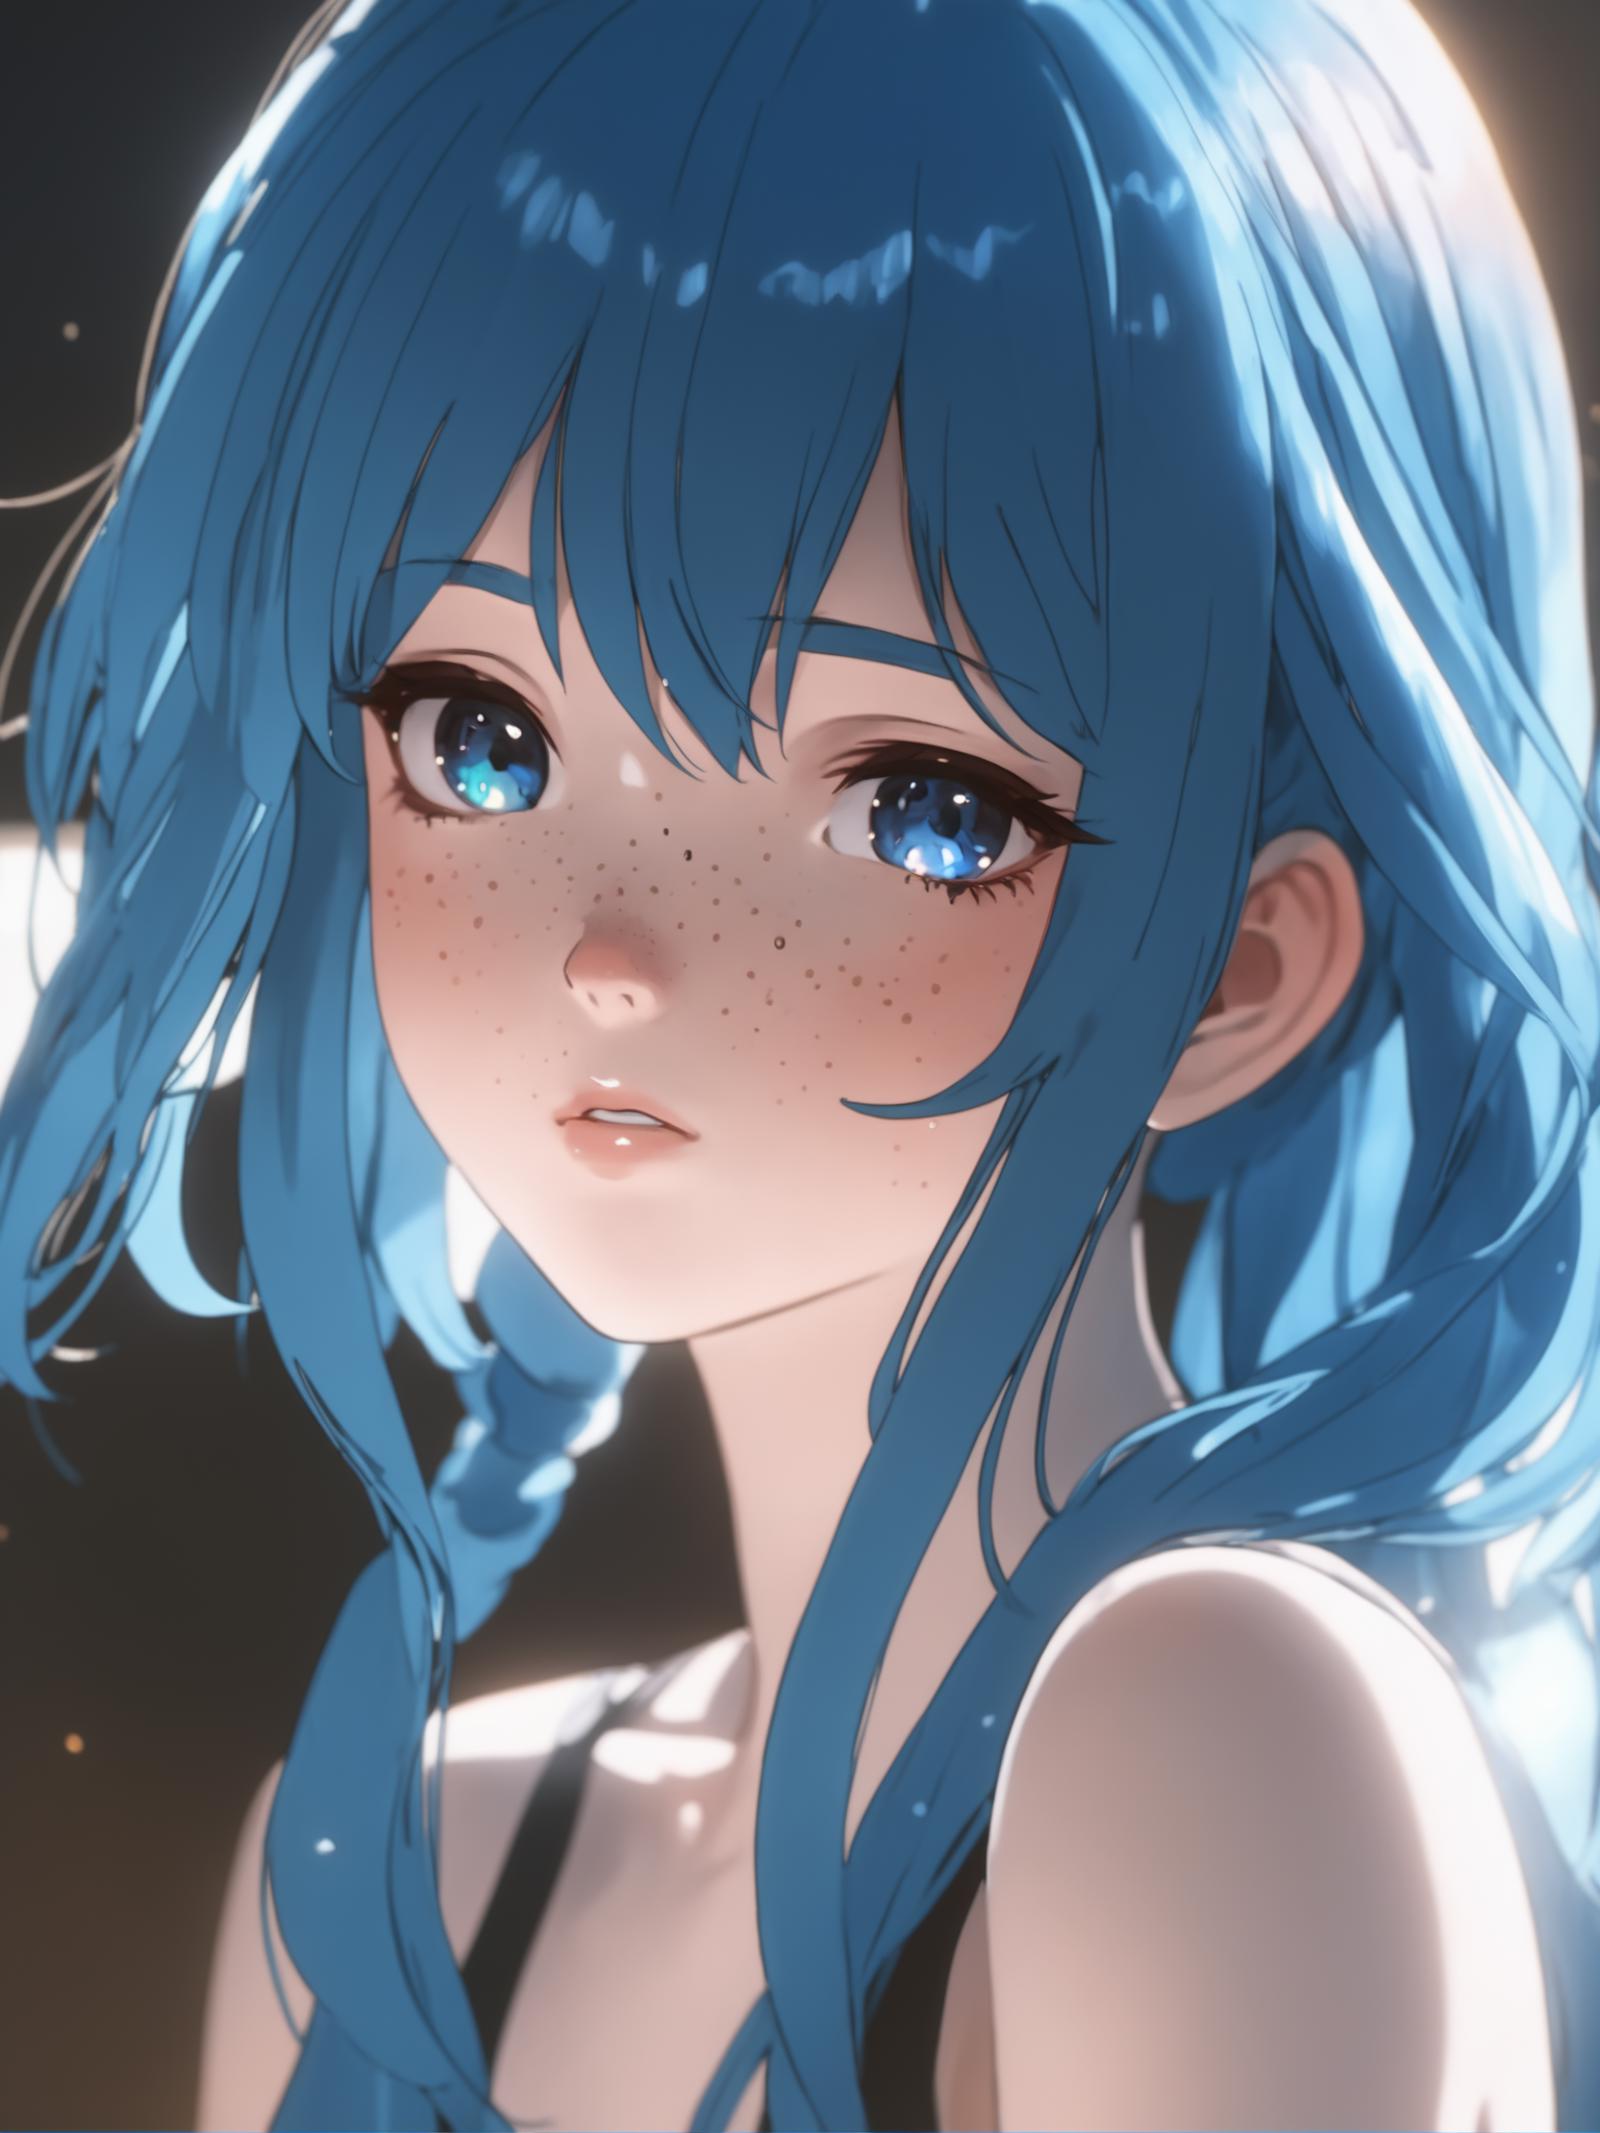 Anime Art Diffusion XL image by Lykon